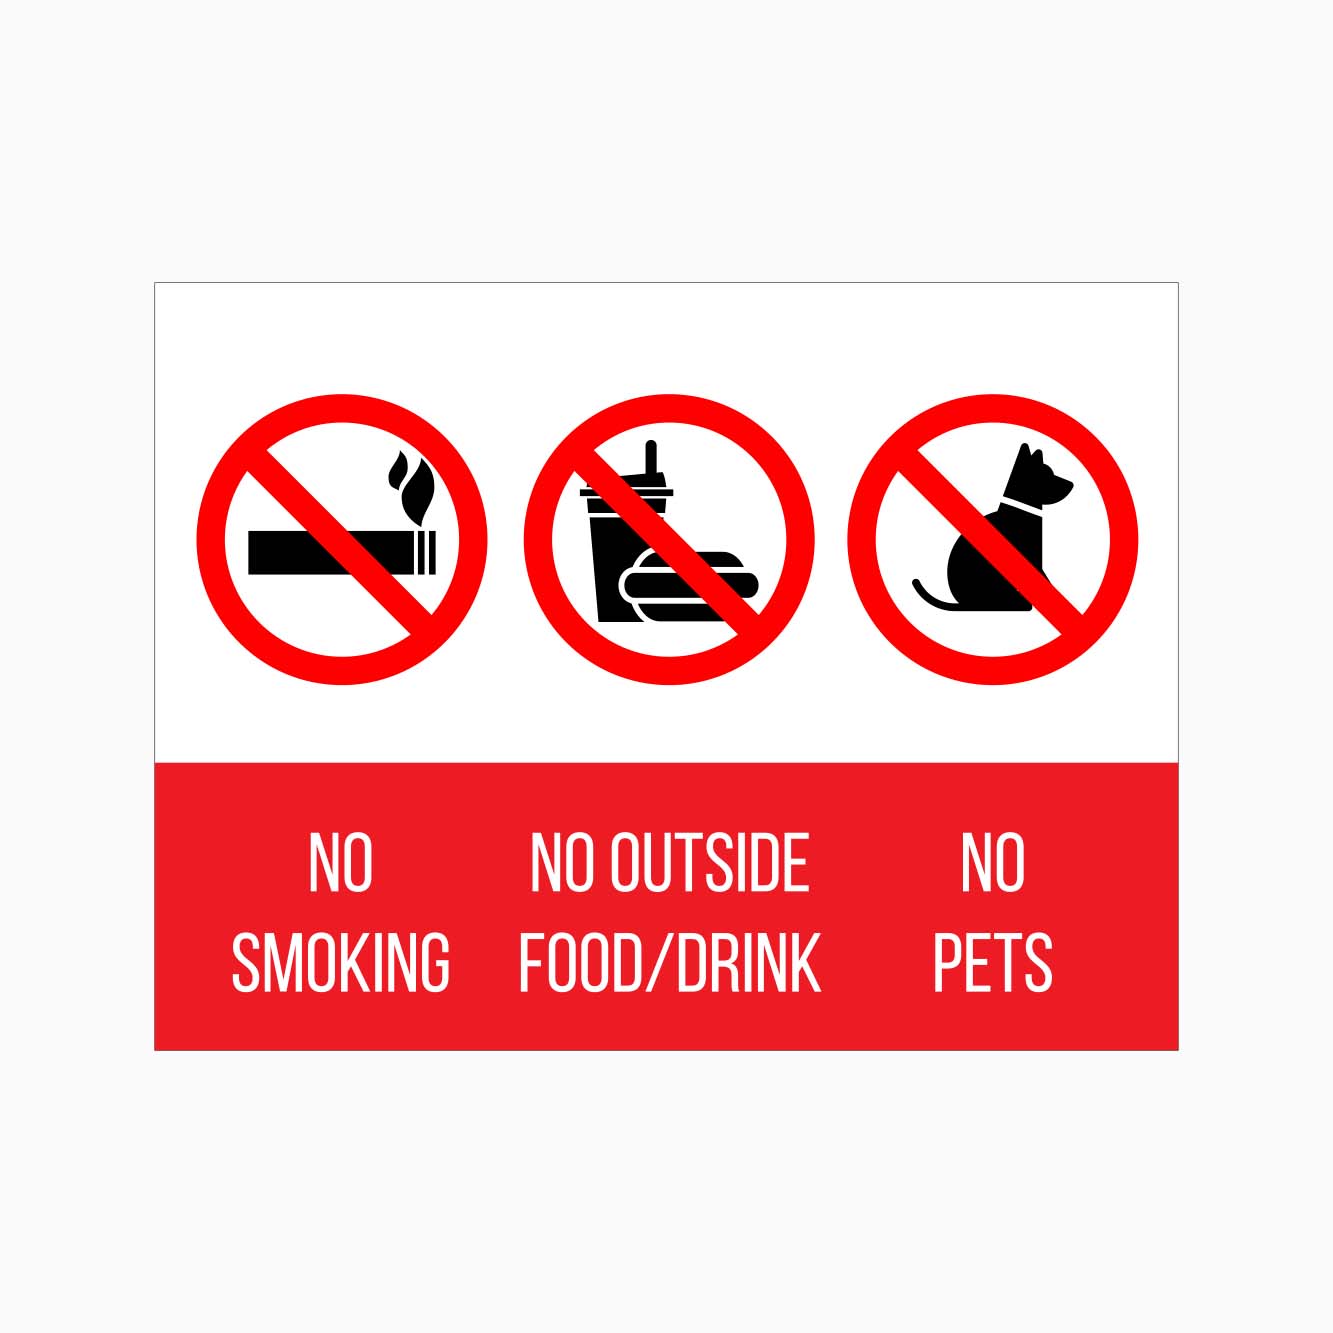 NO SMOKING, NO OUTSIDE FOOD/DRINK, NO PETS SIGN - GET SIGNS